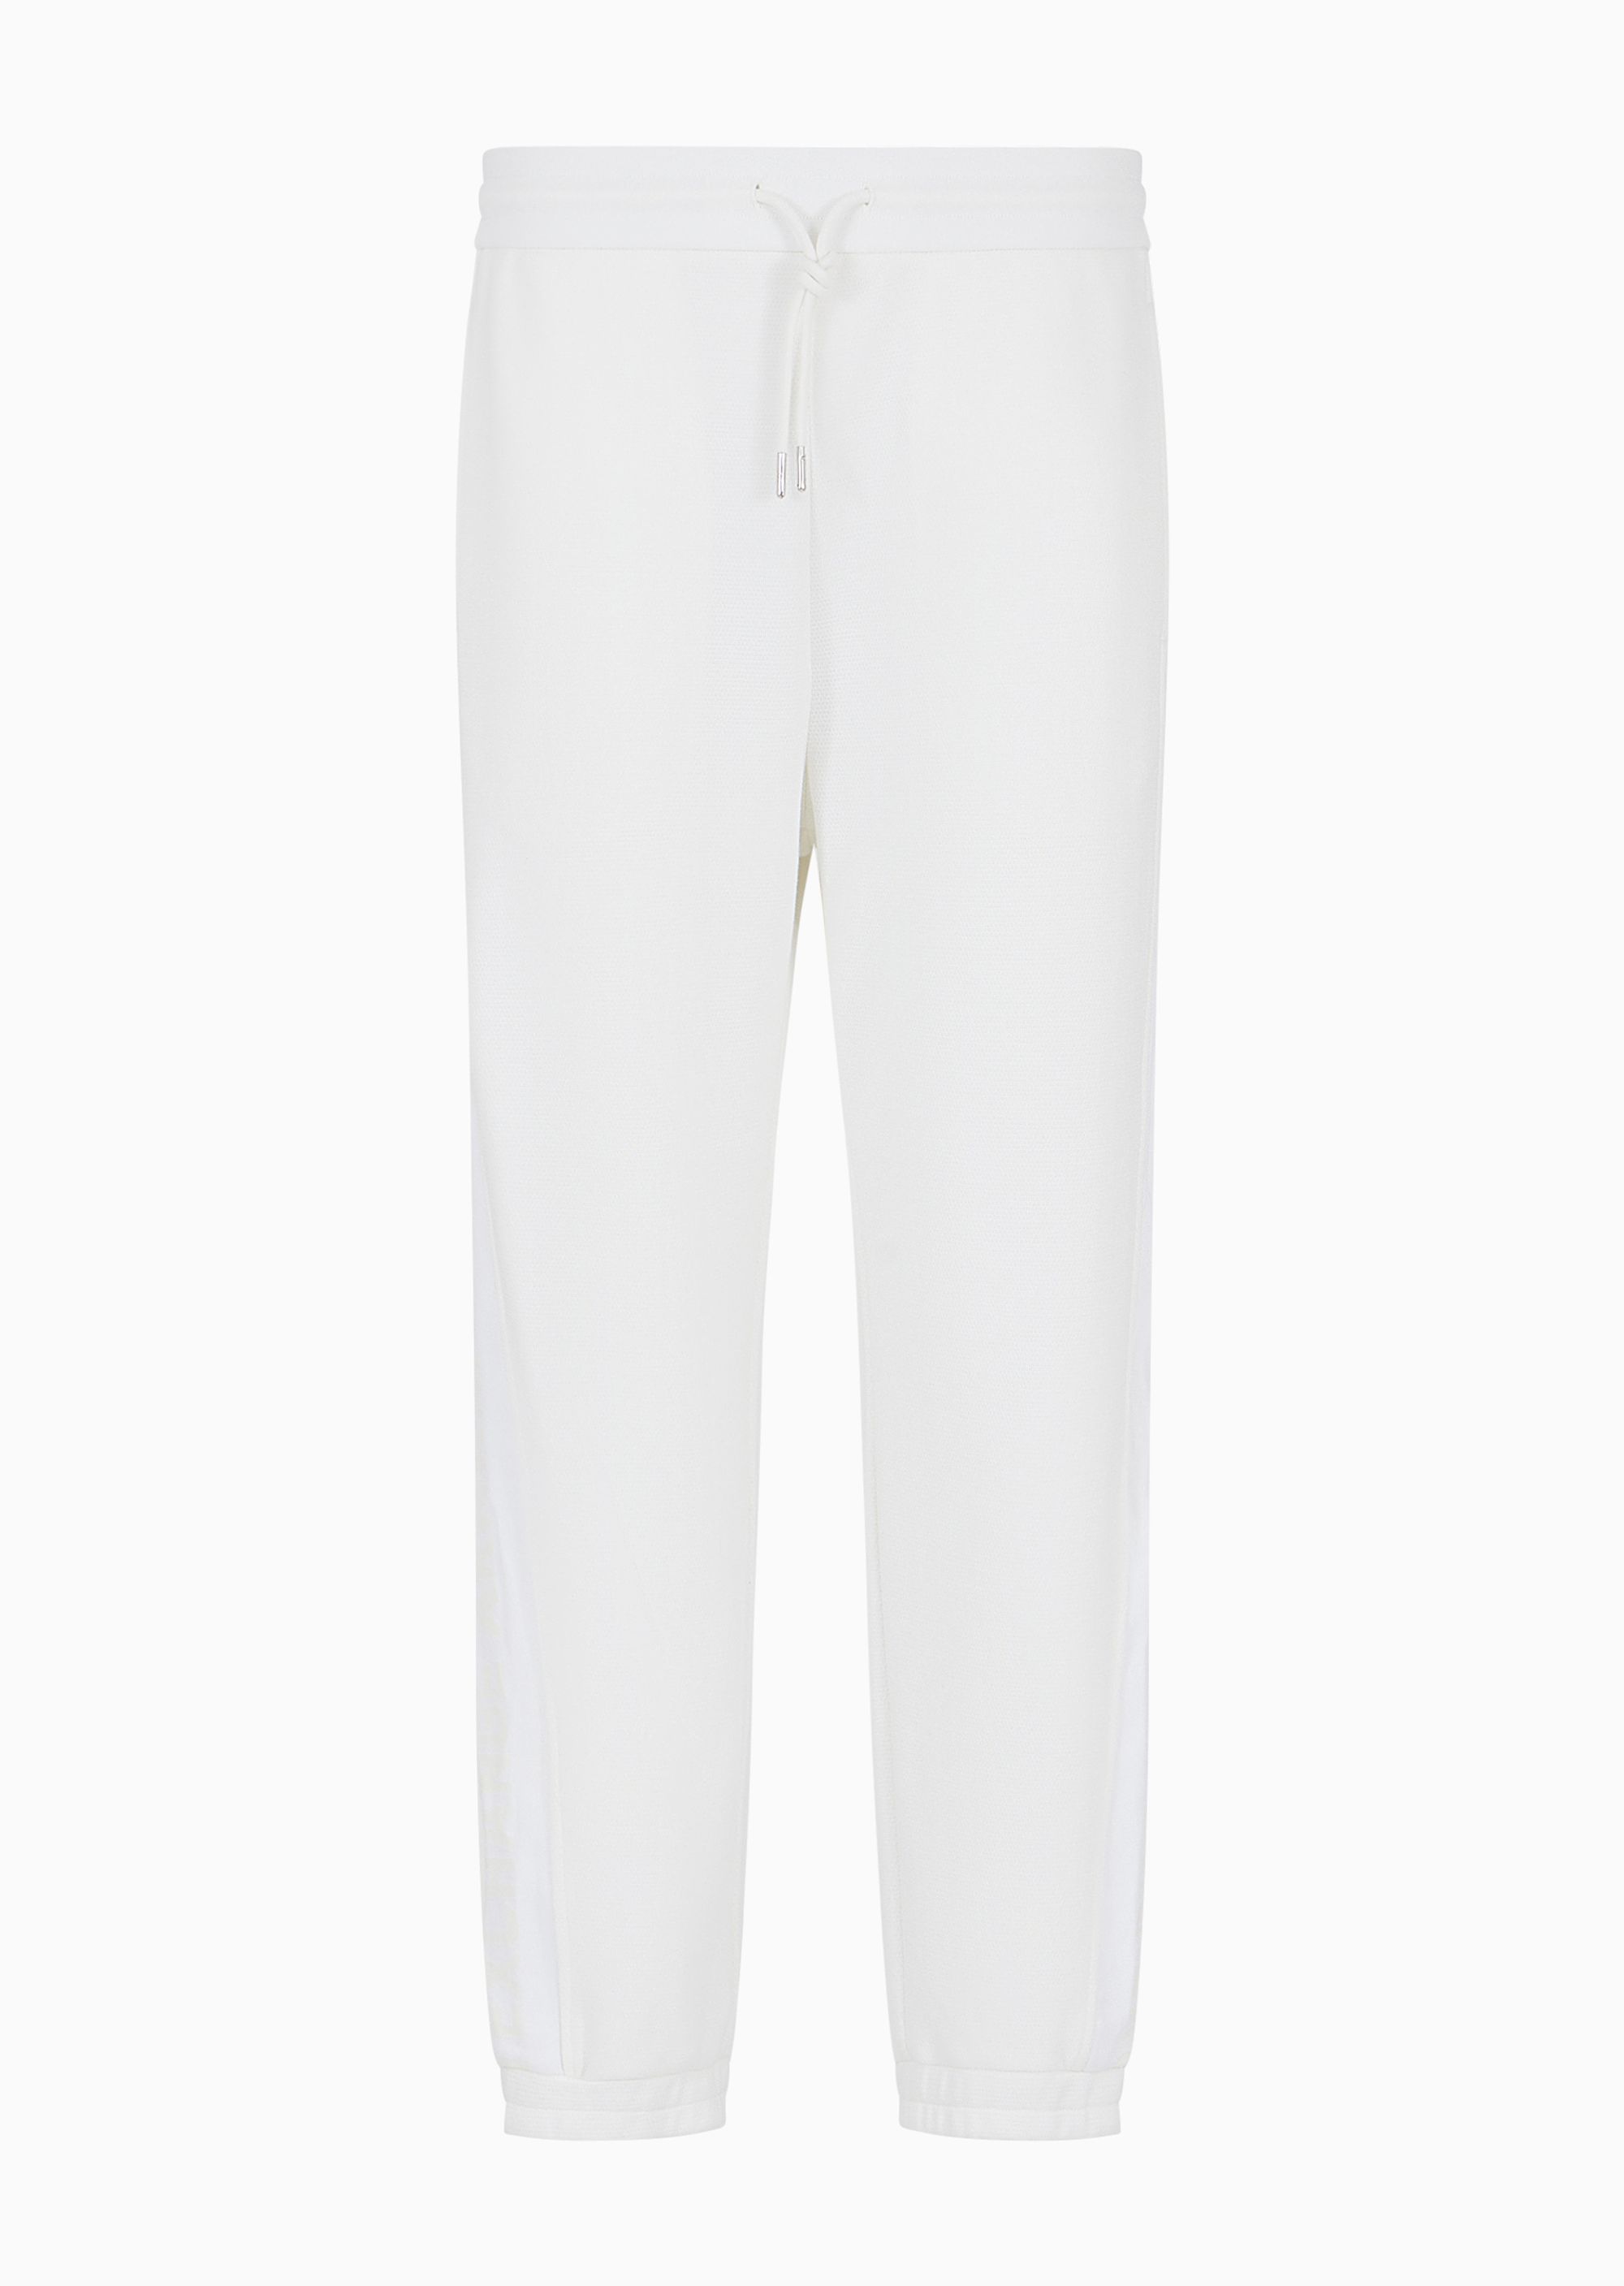 Спортивные брюки Armani Exchange, белый брюки спортивные мужские dysot темно синие